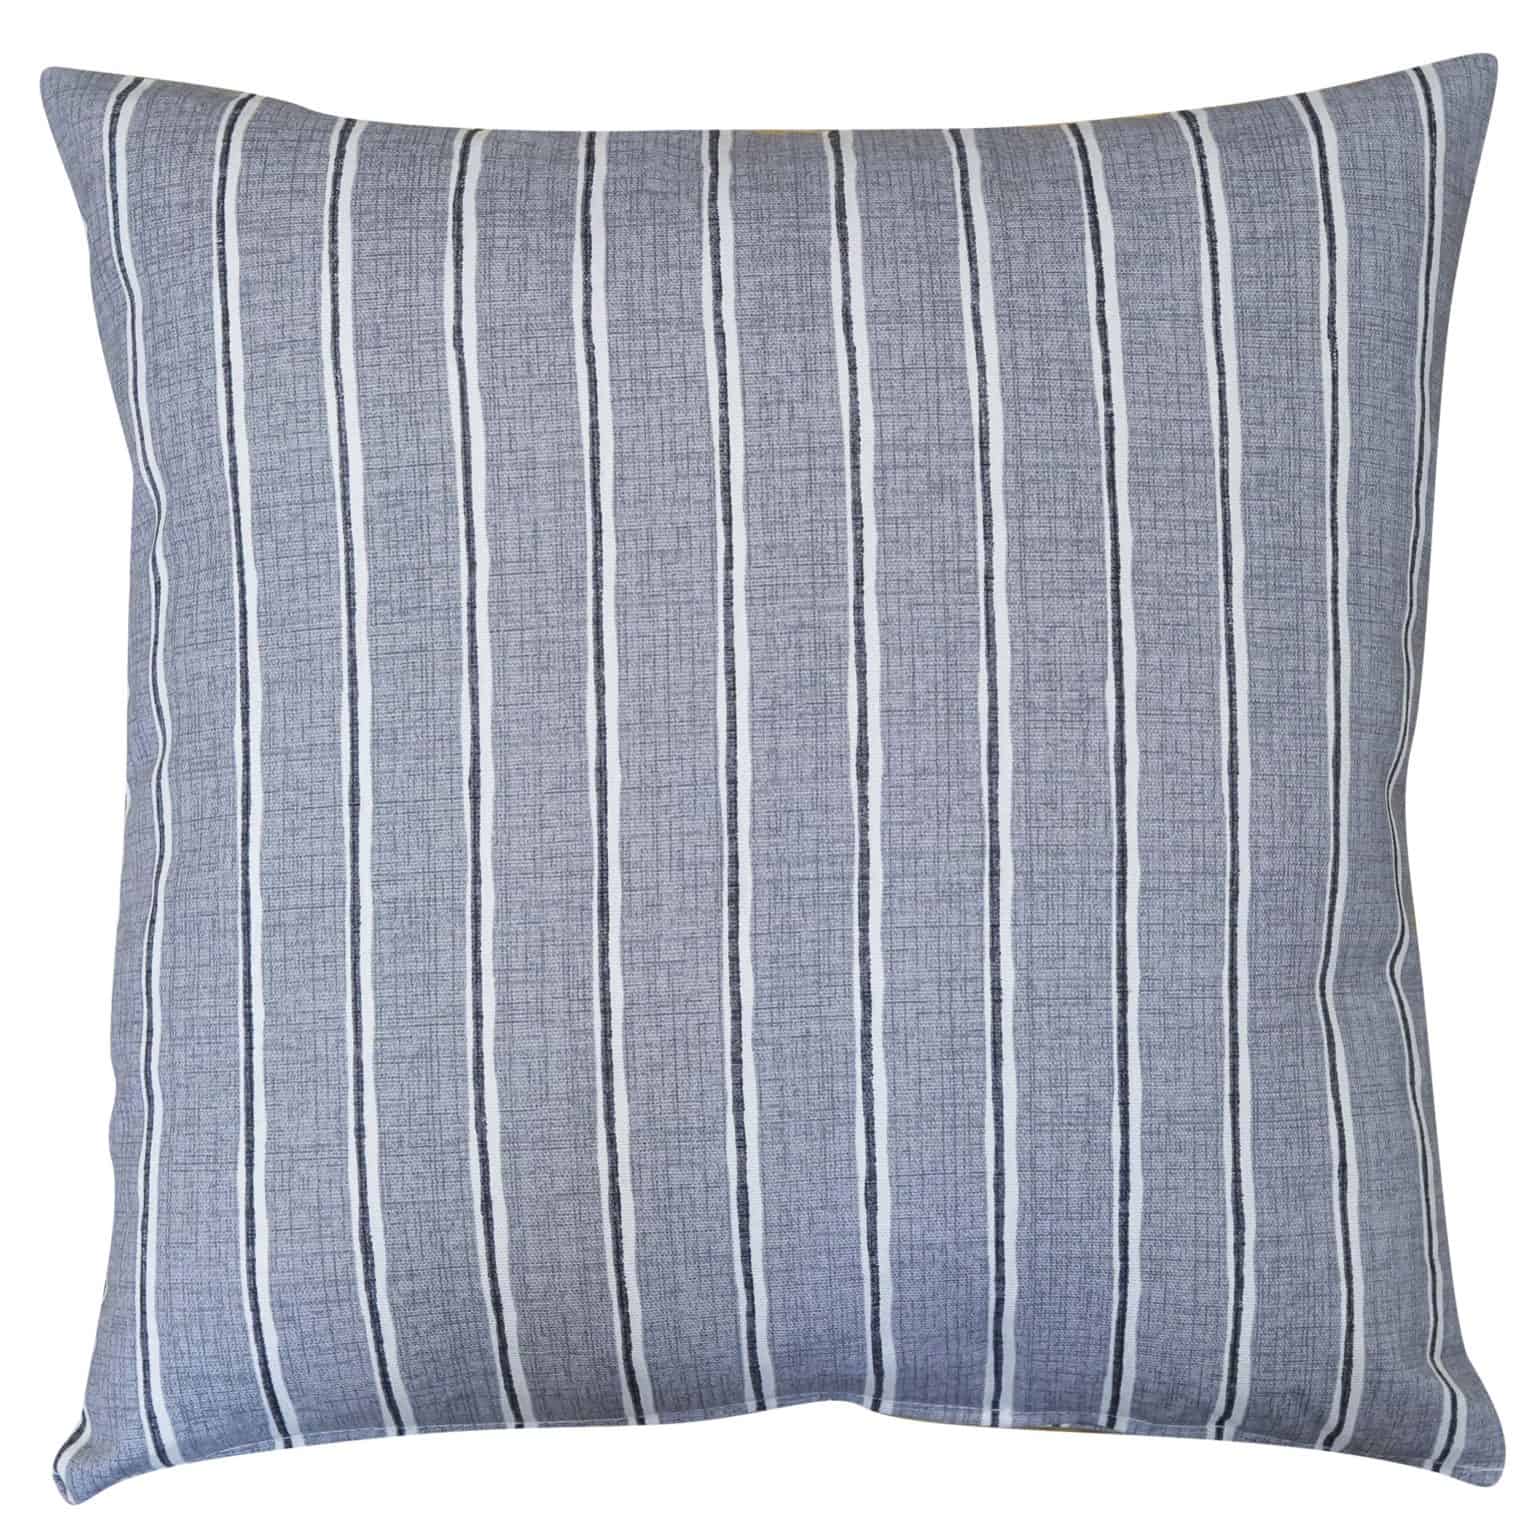 Linen Loft - Inspired Soft Furnishings - Cushions & Kitchen Accessories